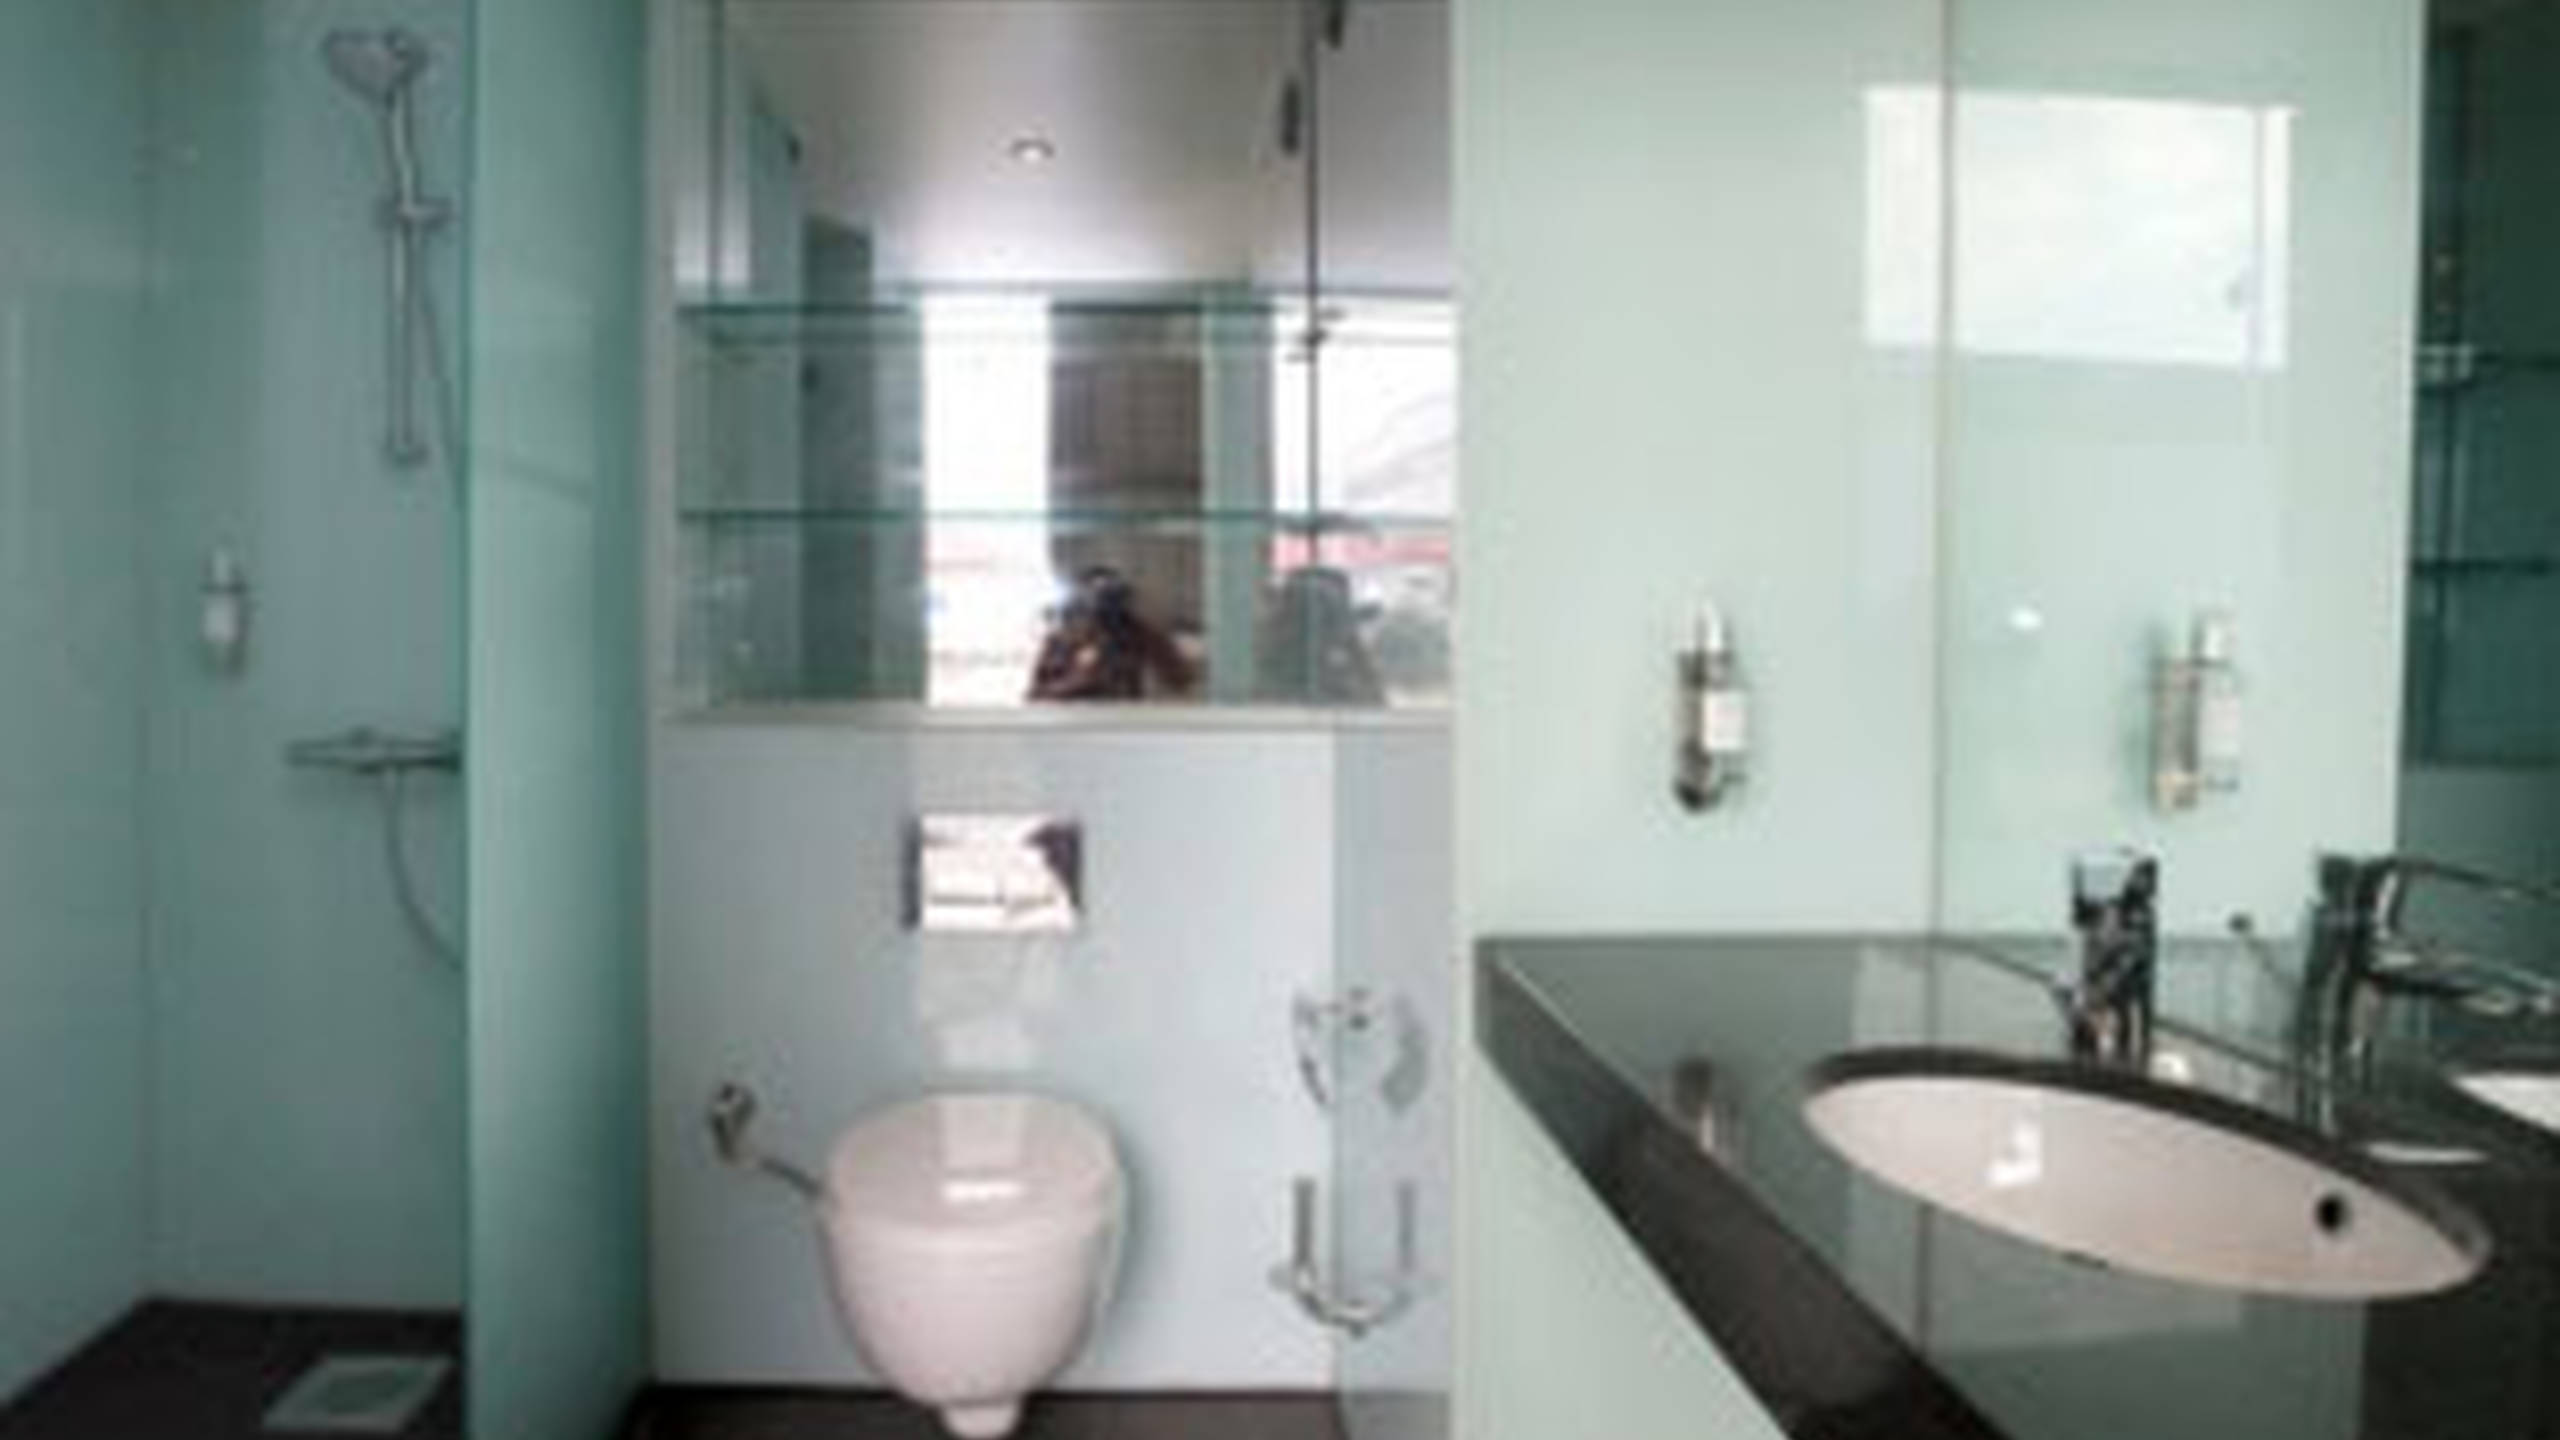 ADMARES delivered 464 modular bathrooms of Ramada design